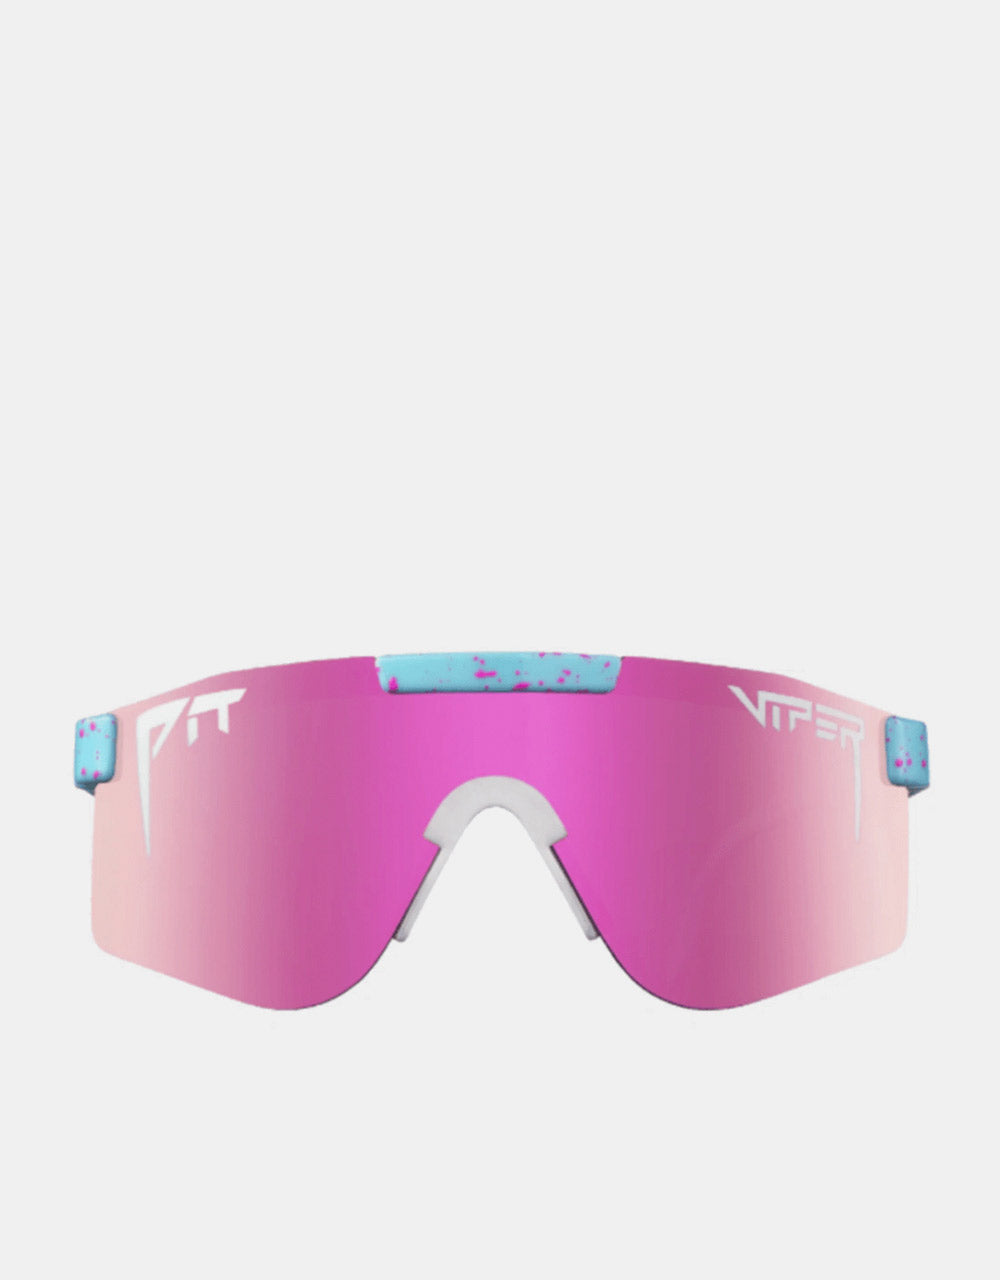 Pit Viper Gobby Double Wide Sunglasses - Pink Revo Mirror